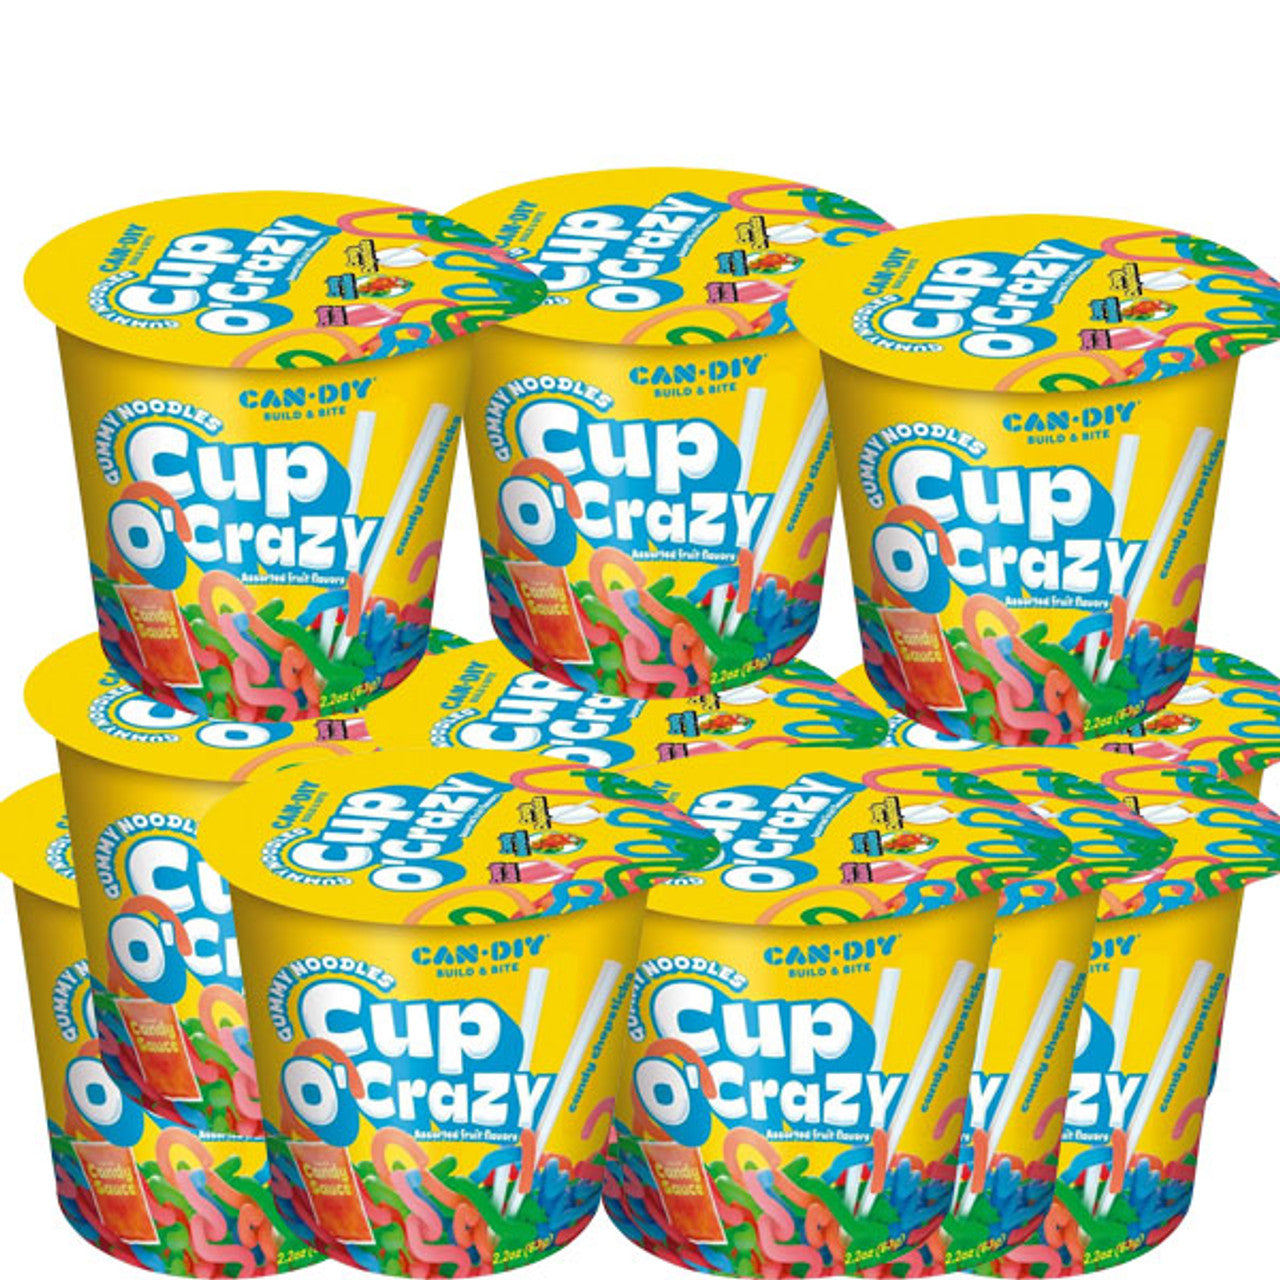 Can Diy Cup O Crazy Gummi Candy Noodles 2.2oz - 12ct